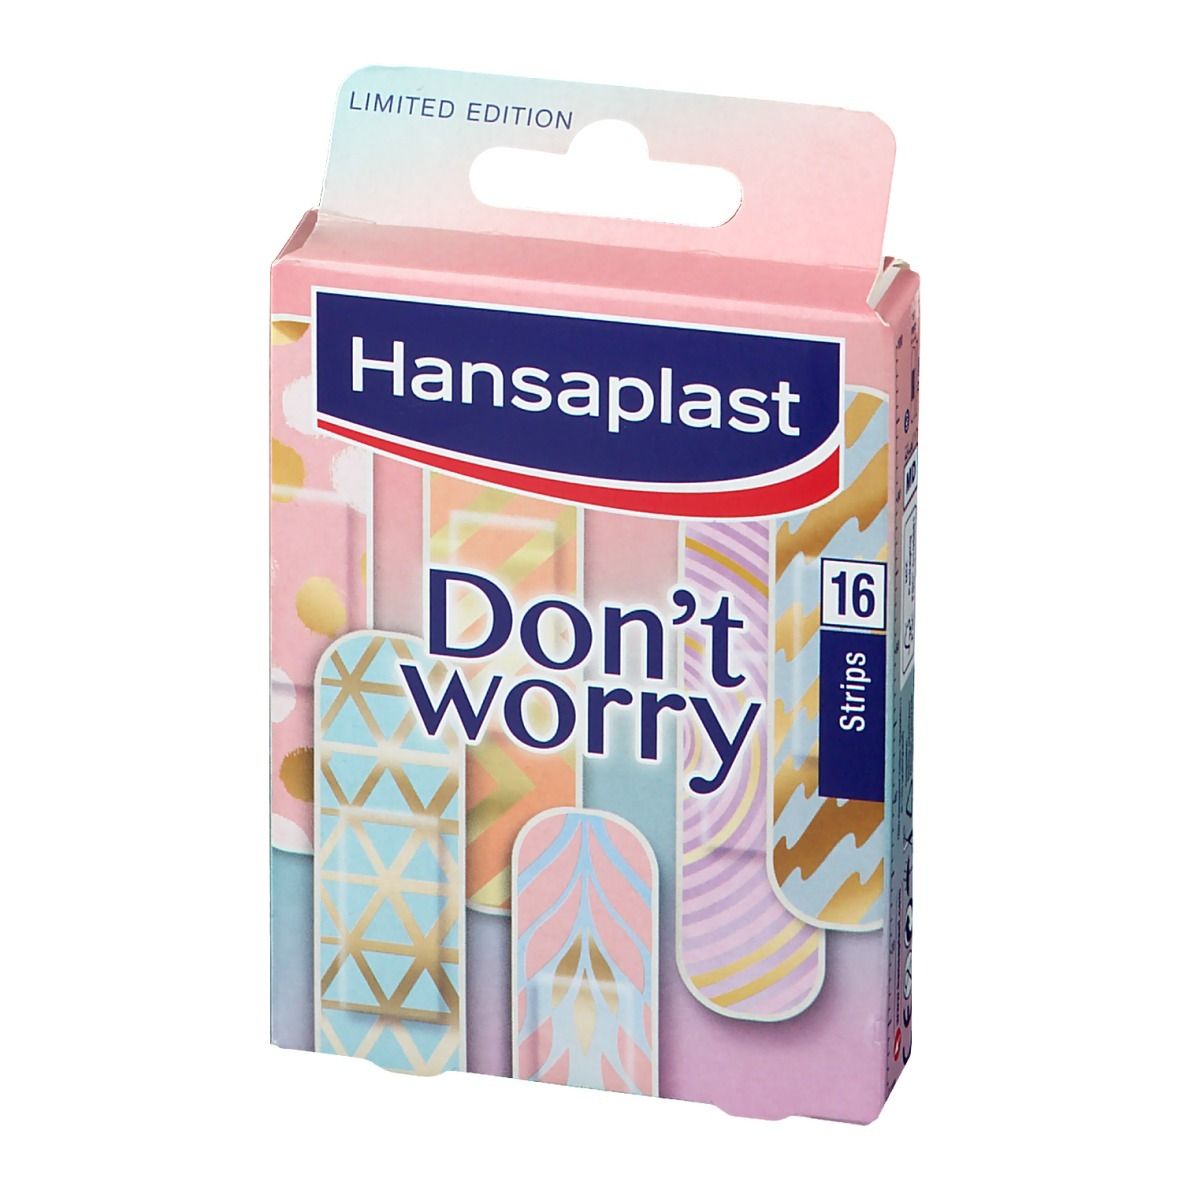 Hansaplast Don't Worry